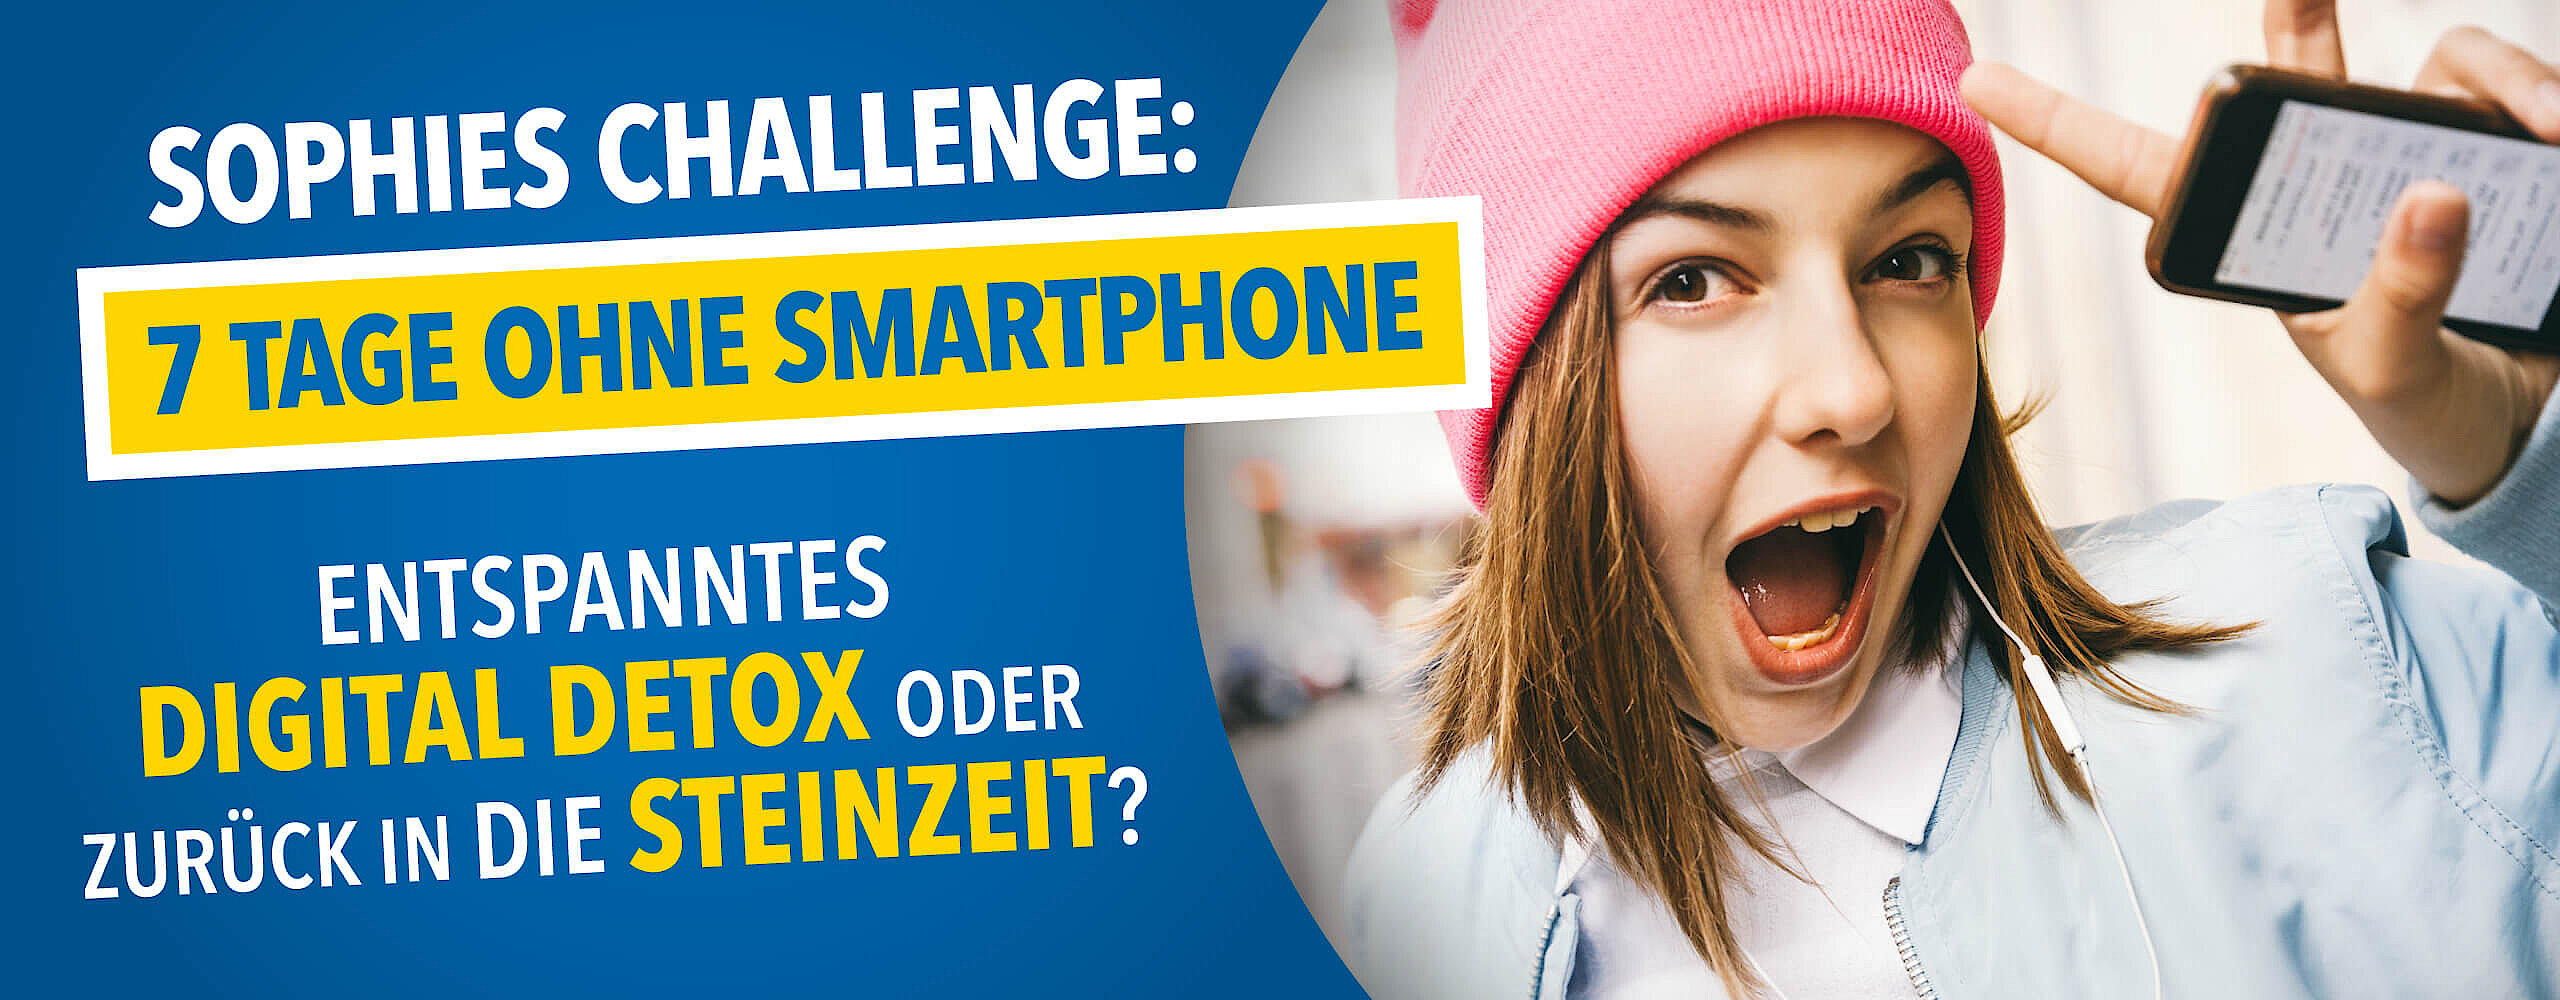 #7TageohneSmartphone – Die Challenge